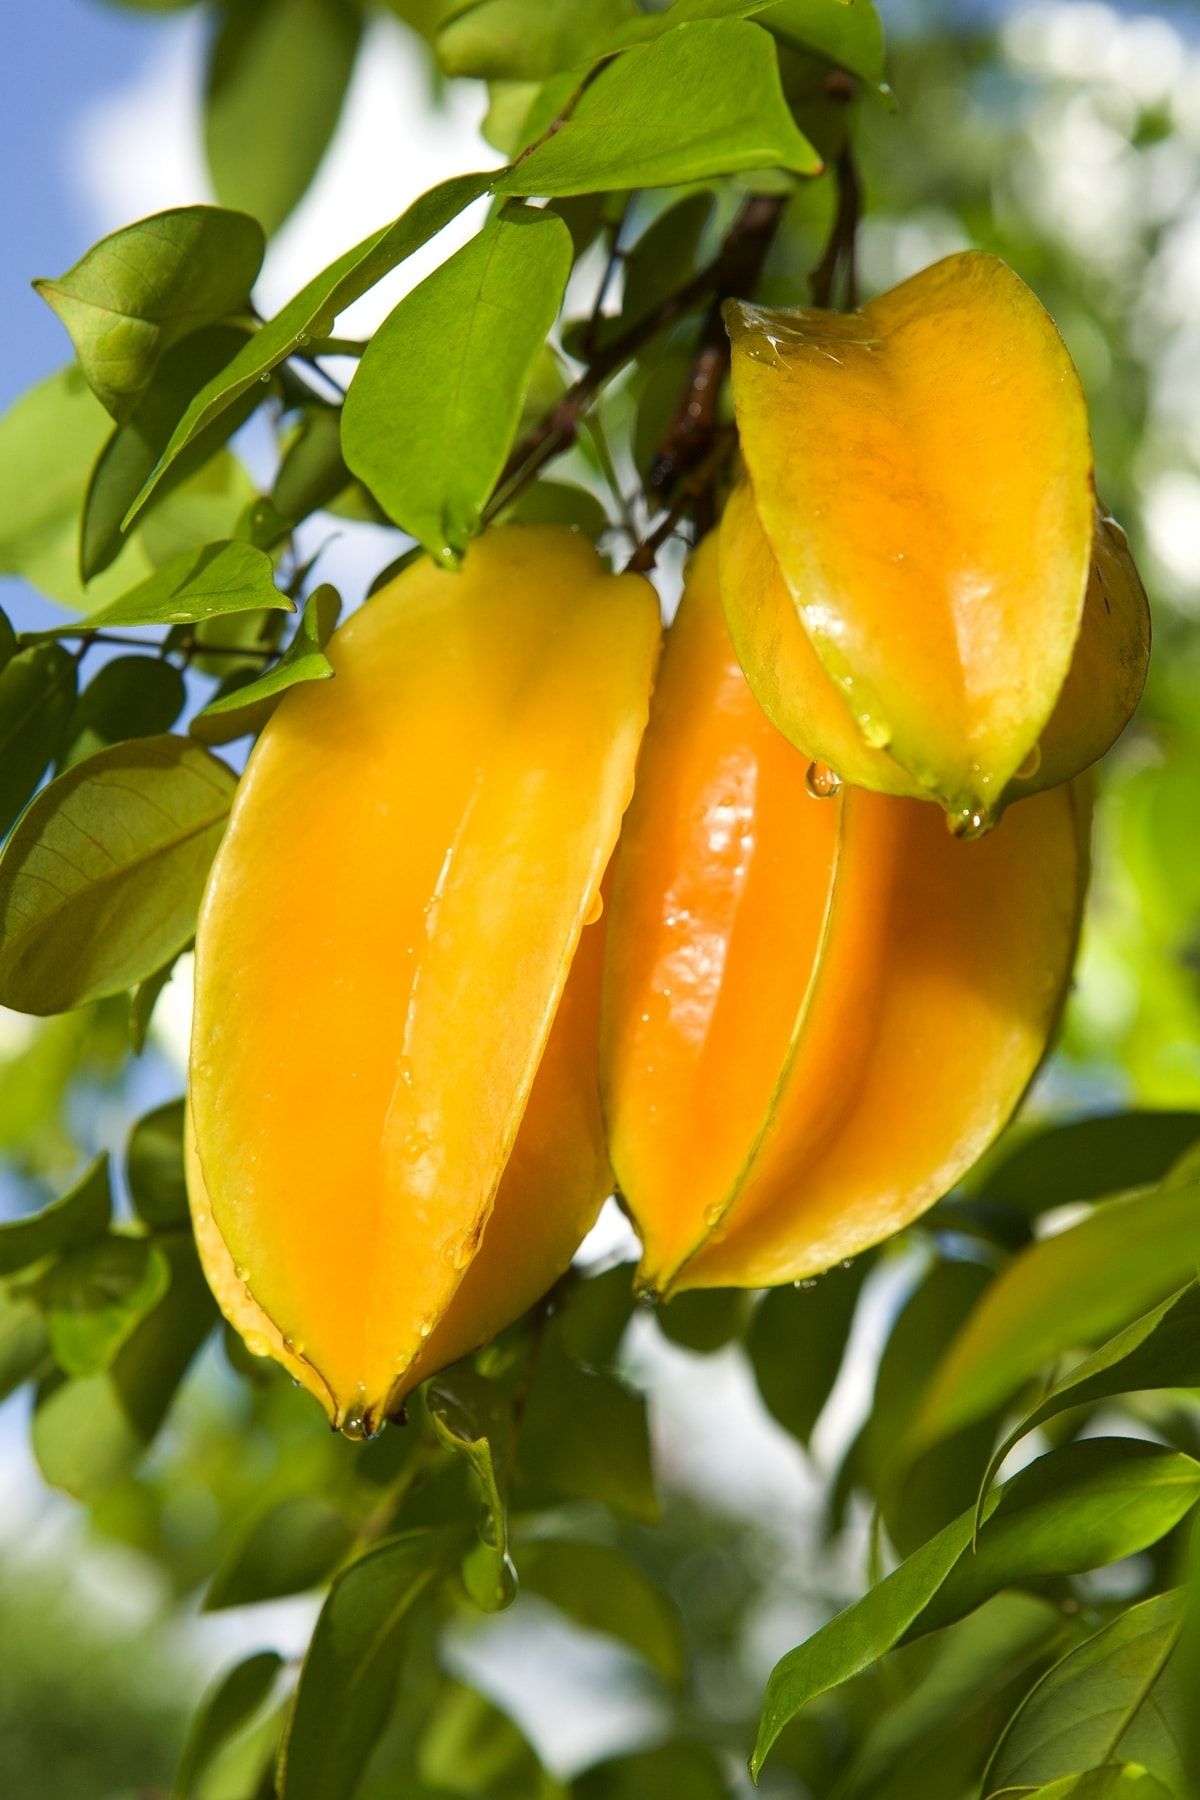 HB BOTANIC Yıldız Meyvesi (starfruit) Carambola Tohumu / 5 Adet Tohum